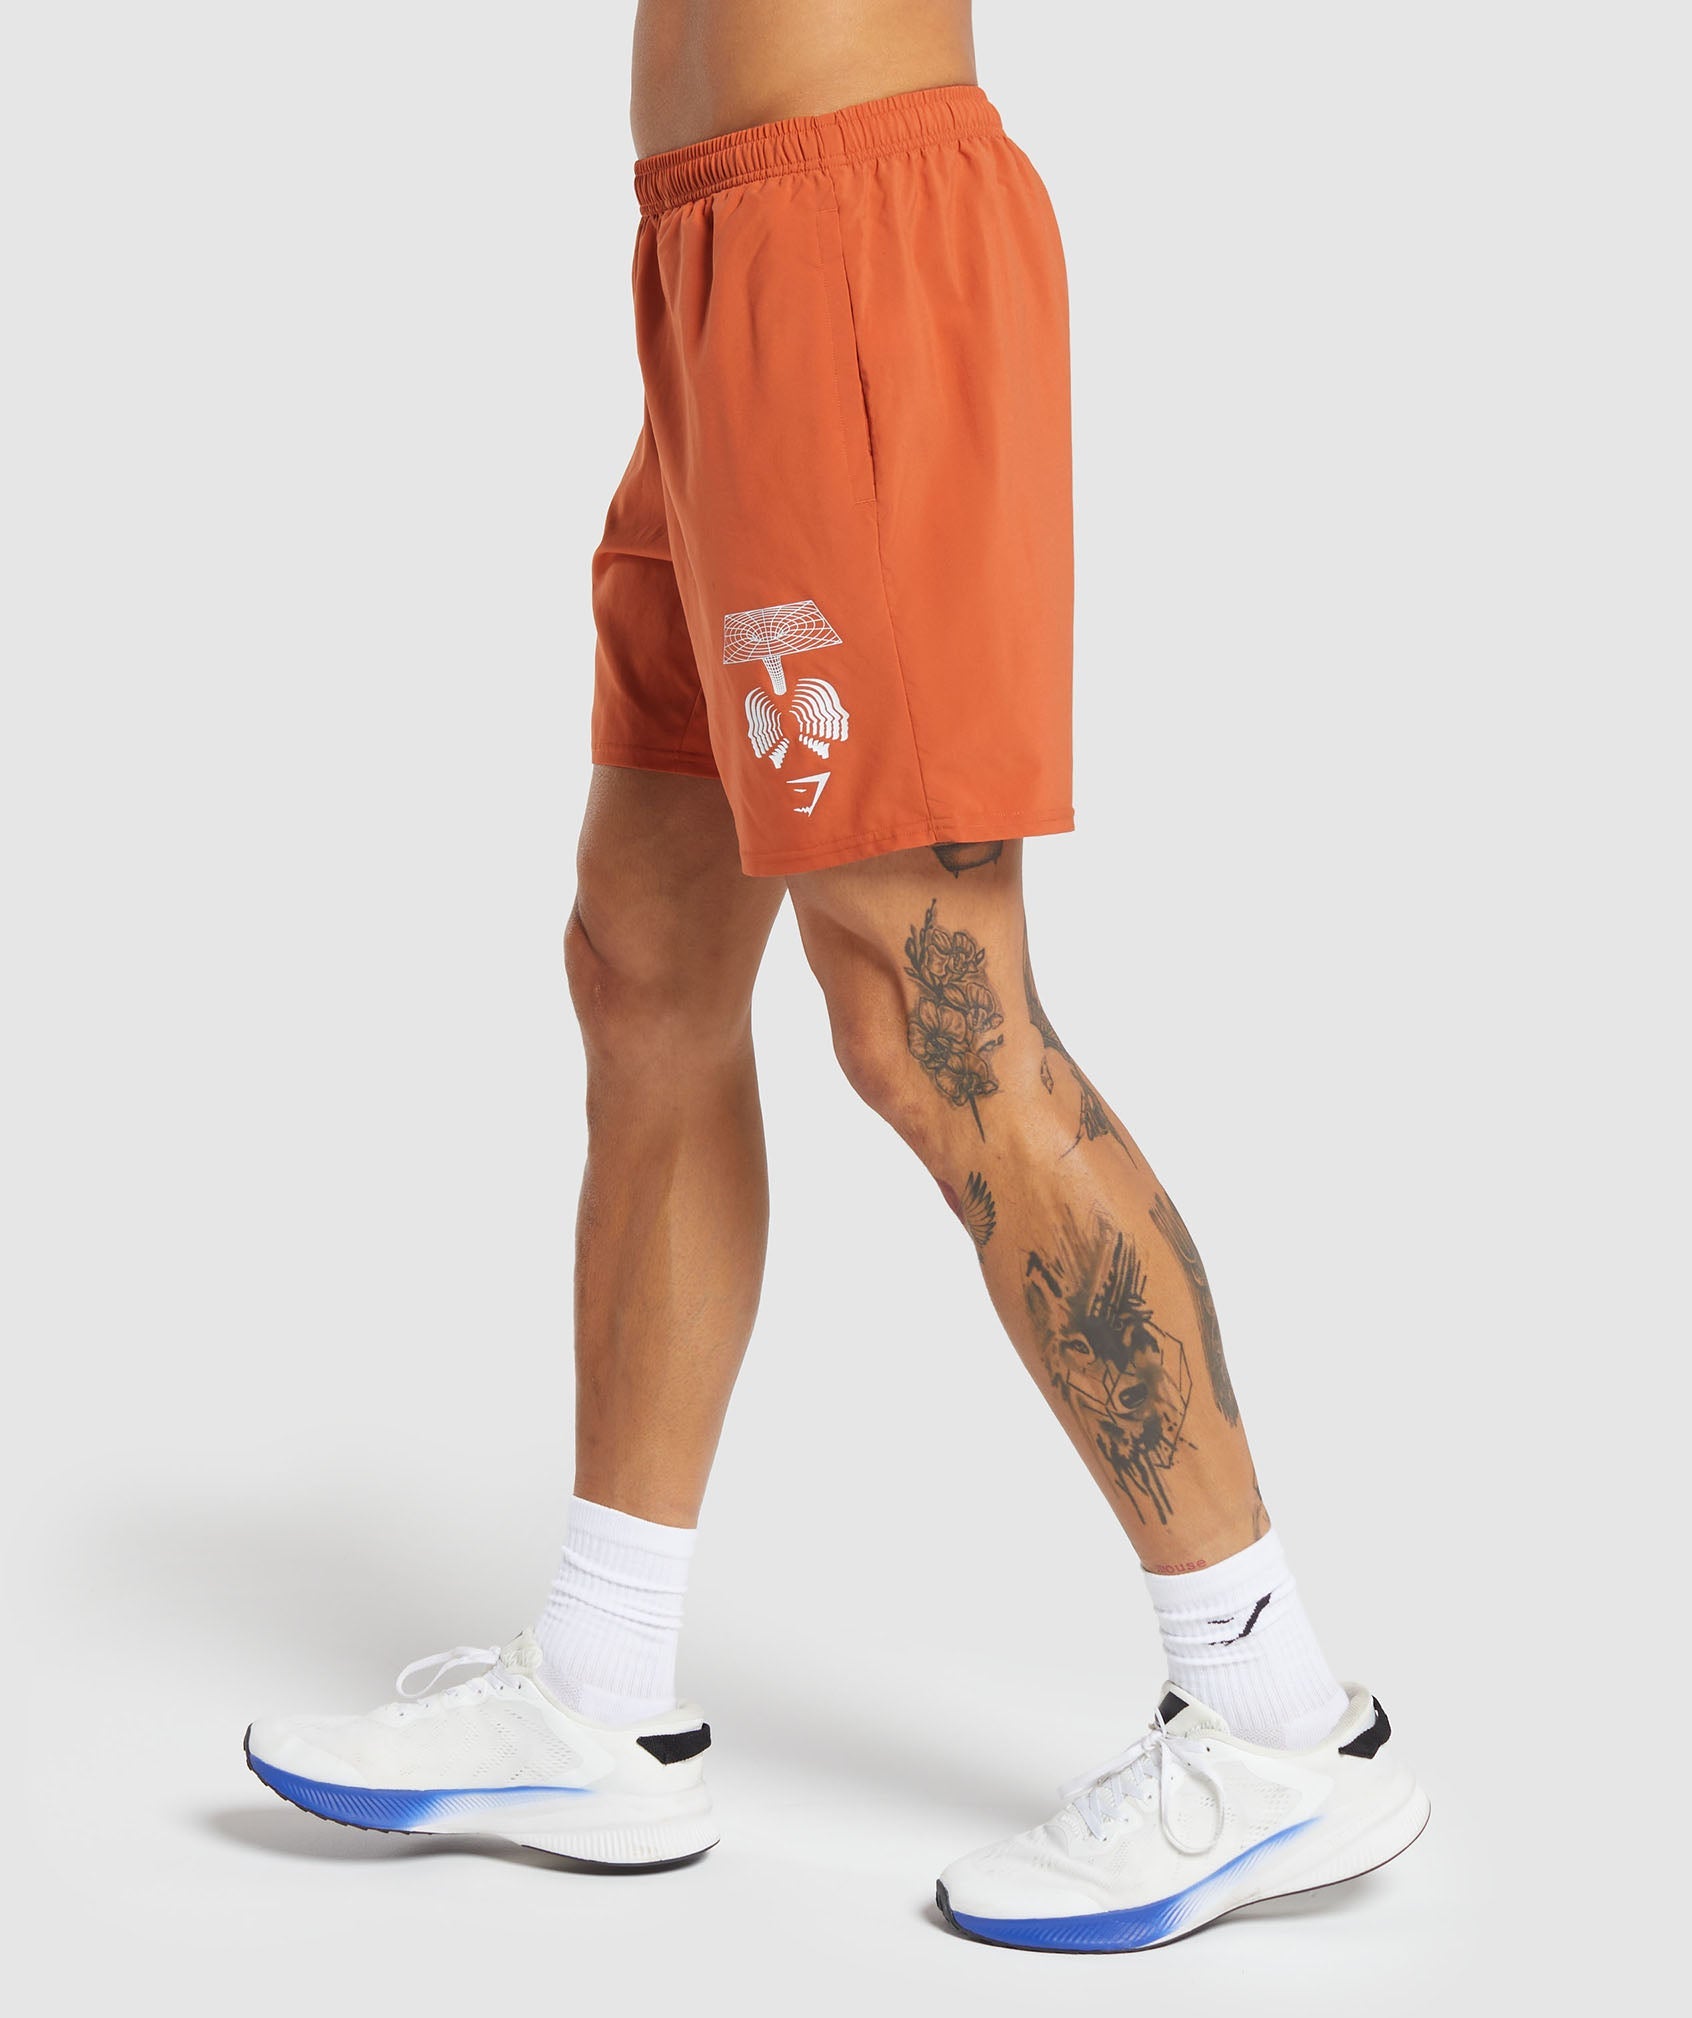 Hybrid Wellness 7" Shorts in Rust Orange - view 3